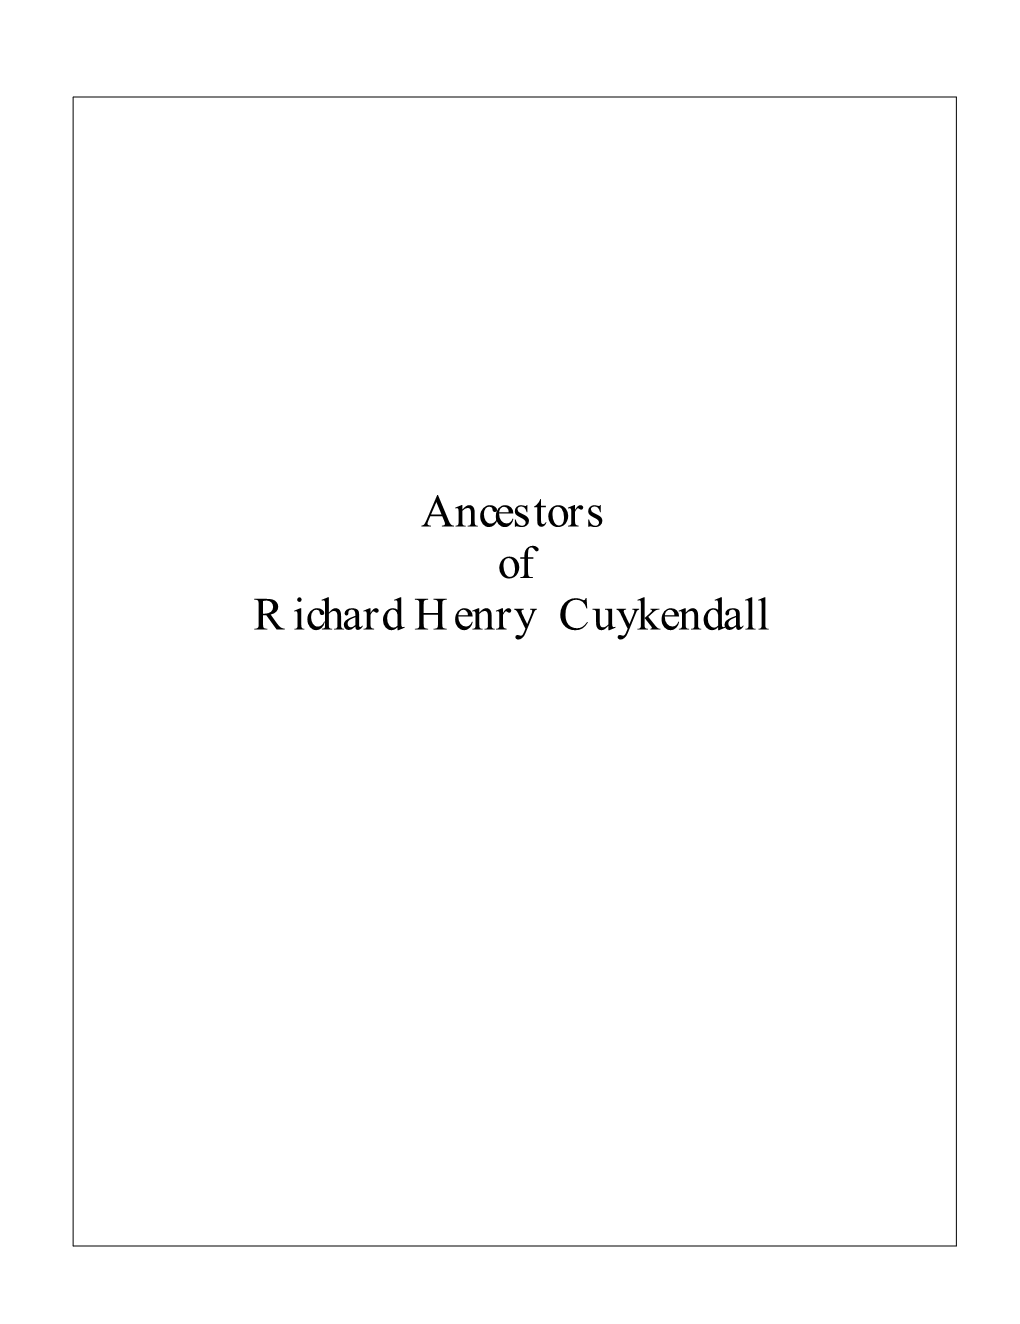 Ancestors of Richard Henry Cuykendall